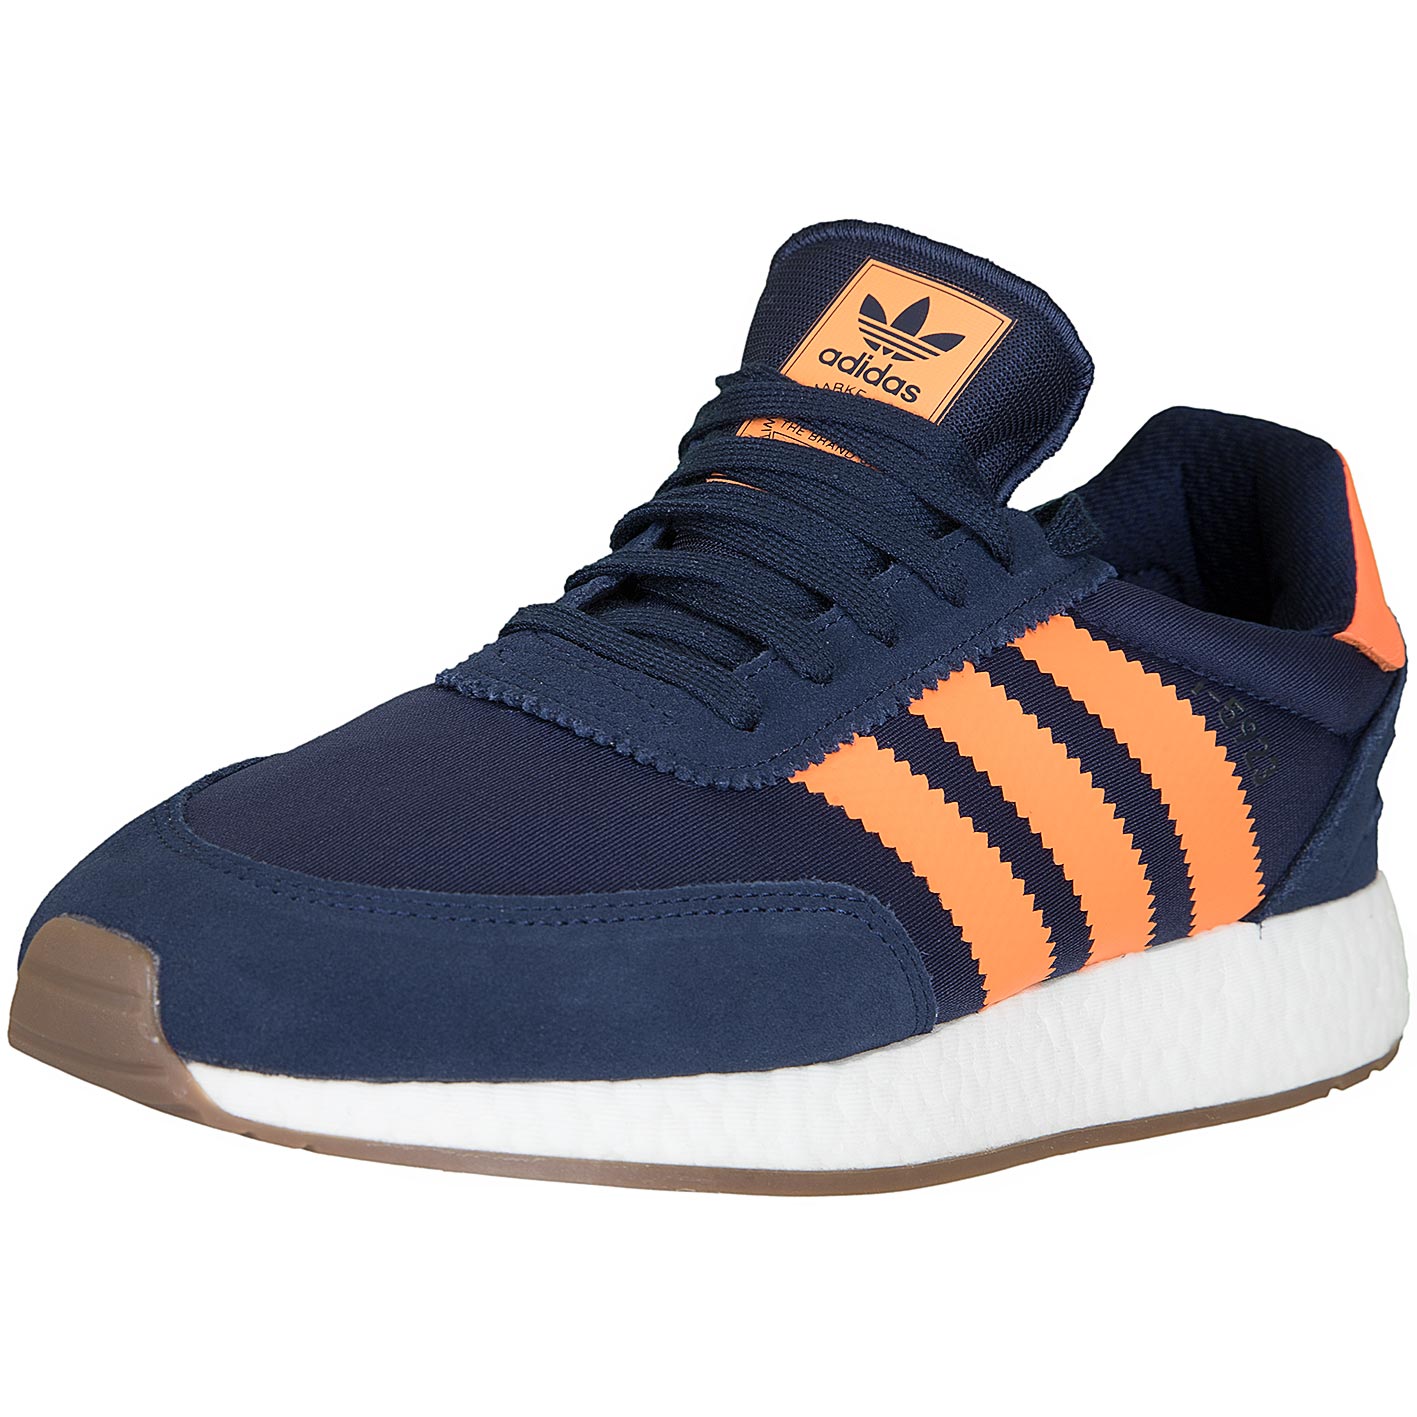 ☆ Adidas Originals Sneaker I-5923 dunkelblau/orange - hier bestellen!